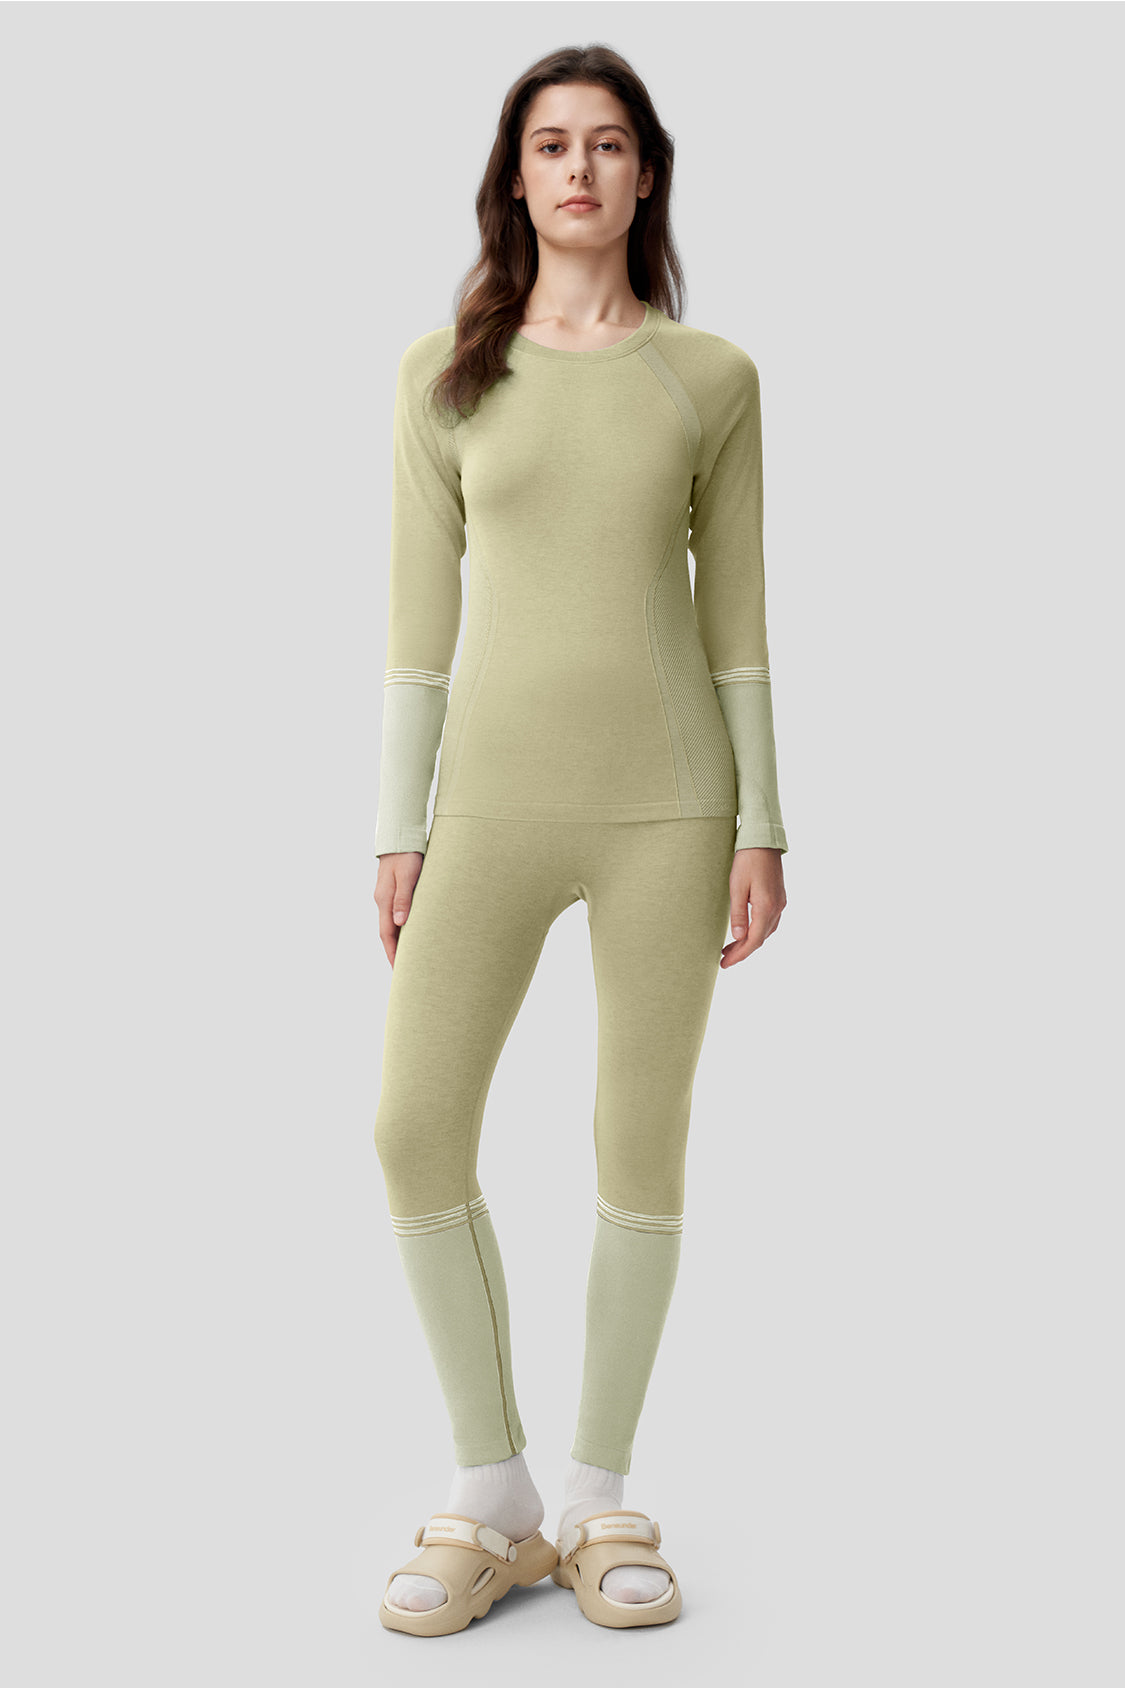 Thermal Underwear Women's High-neck Thickened Plus Velvet Suit Winter Inner  Wear Semi-high-neck Bottoming Shirt